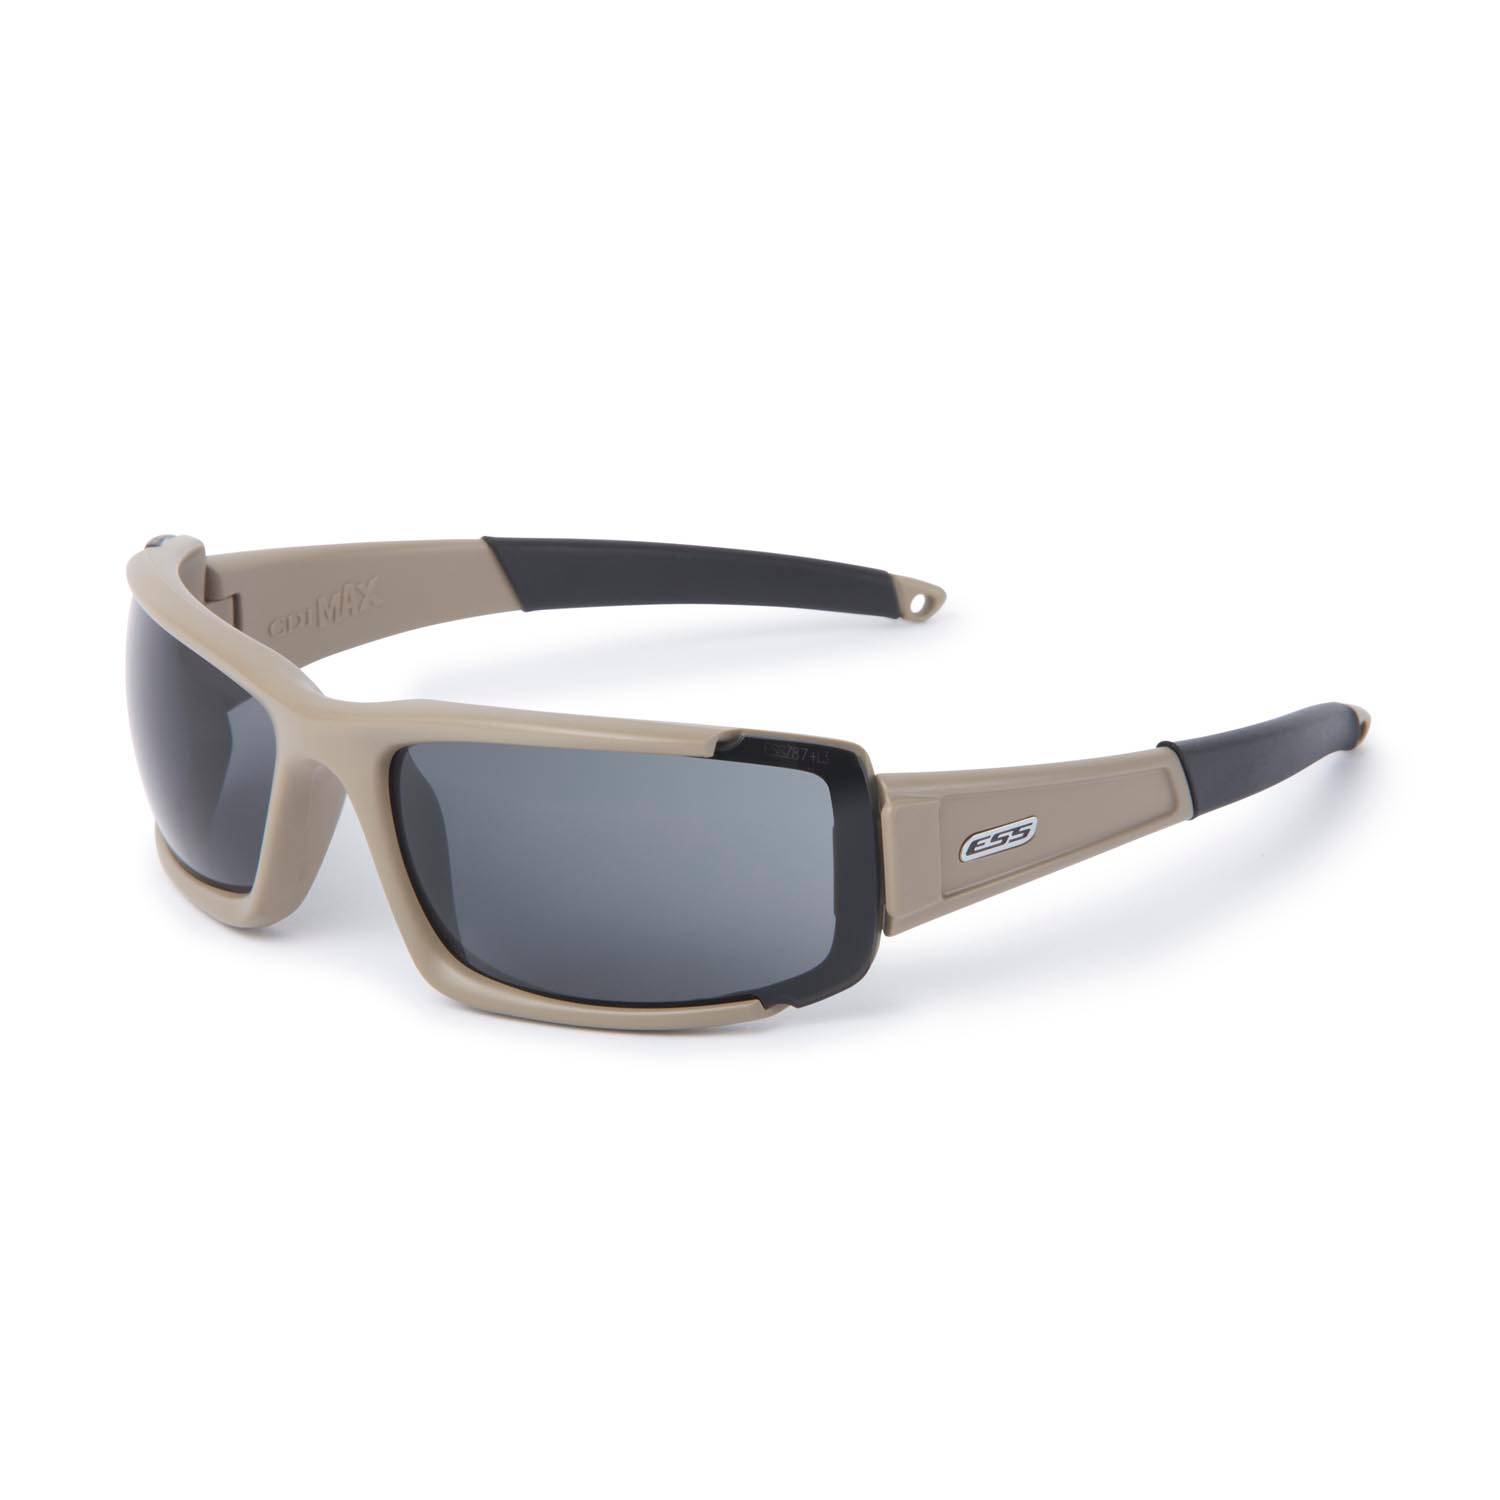 ESS CDI Max Terrain Tan Sunglasses with Interchangeable Lens